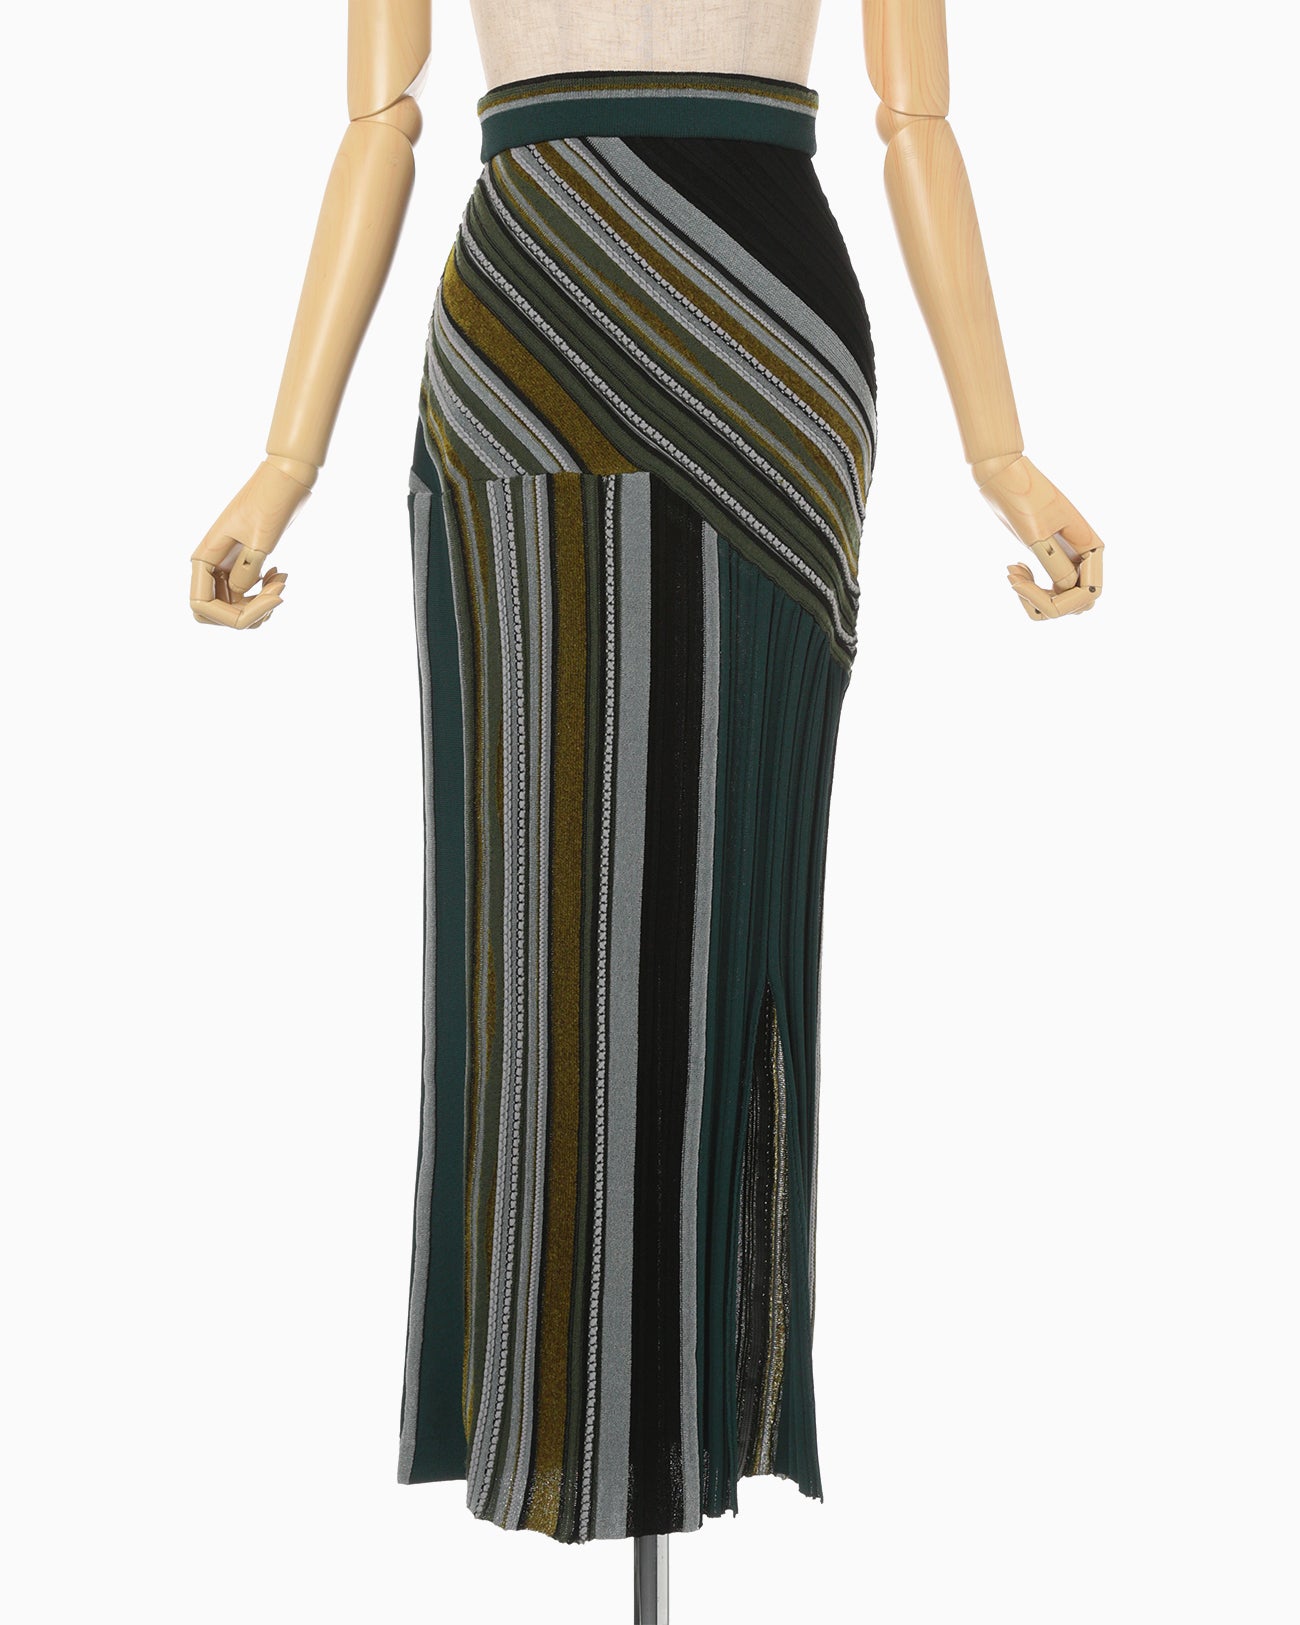 Stripe Jacquard Knitted Skirt - khaki